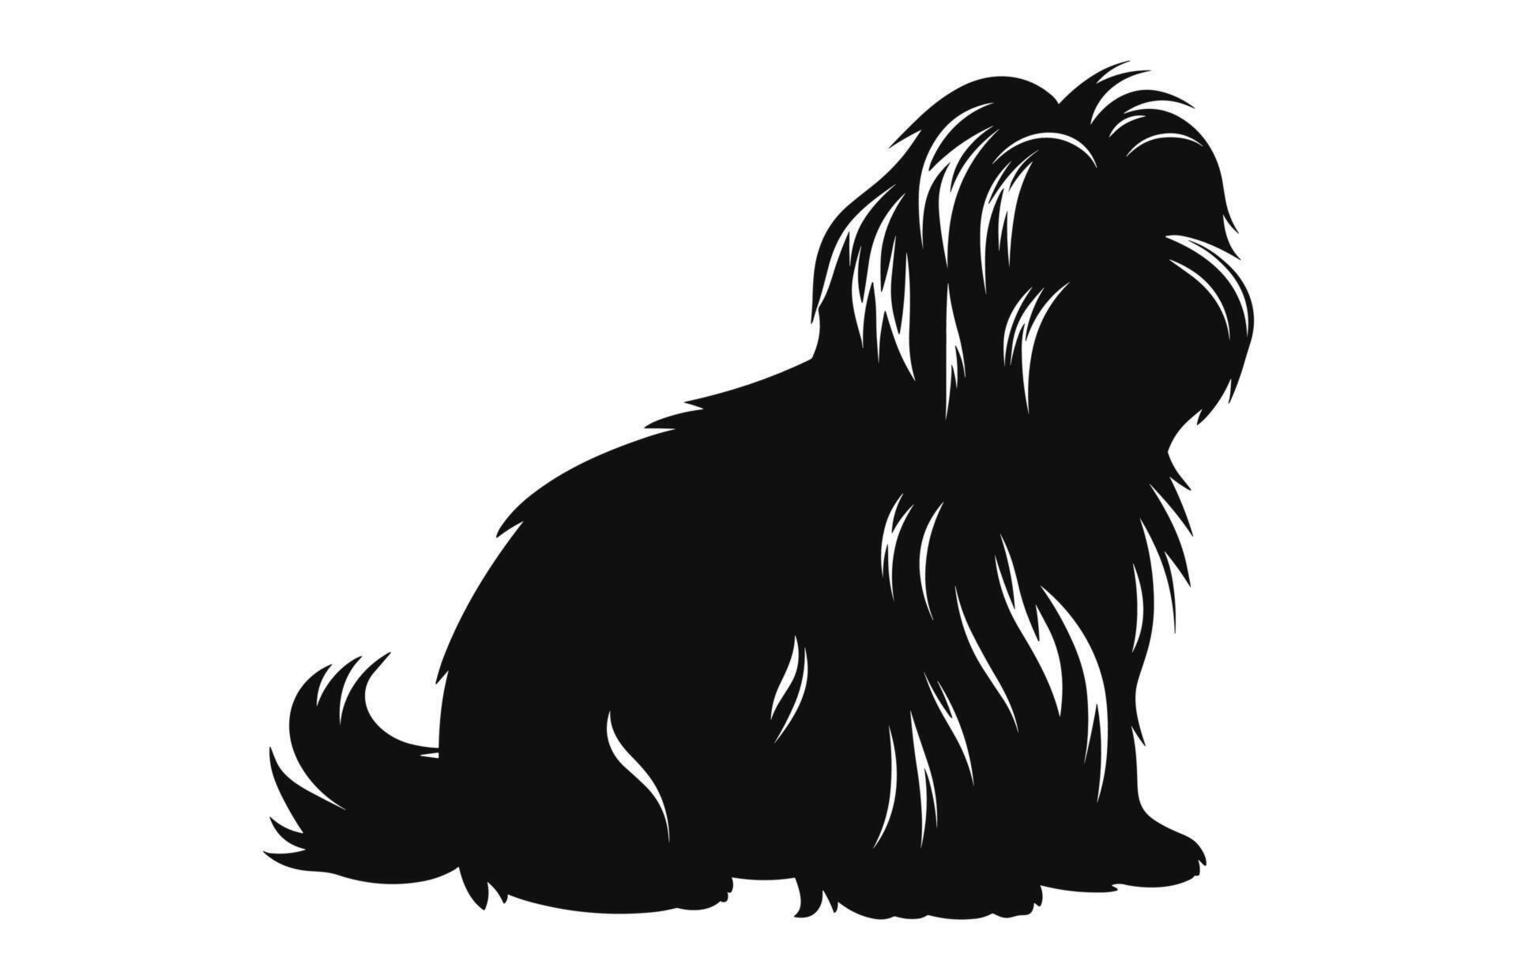 shih tzu perro vector negro silueta aislado en un blanco antecedentes